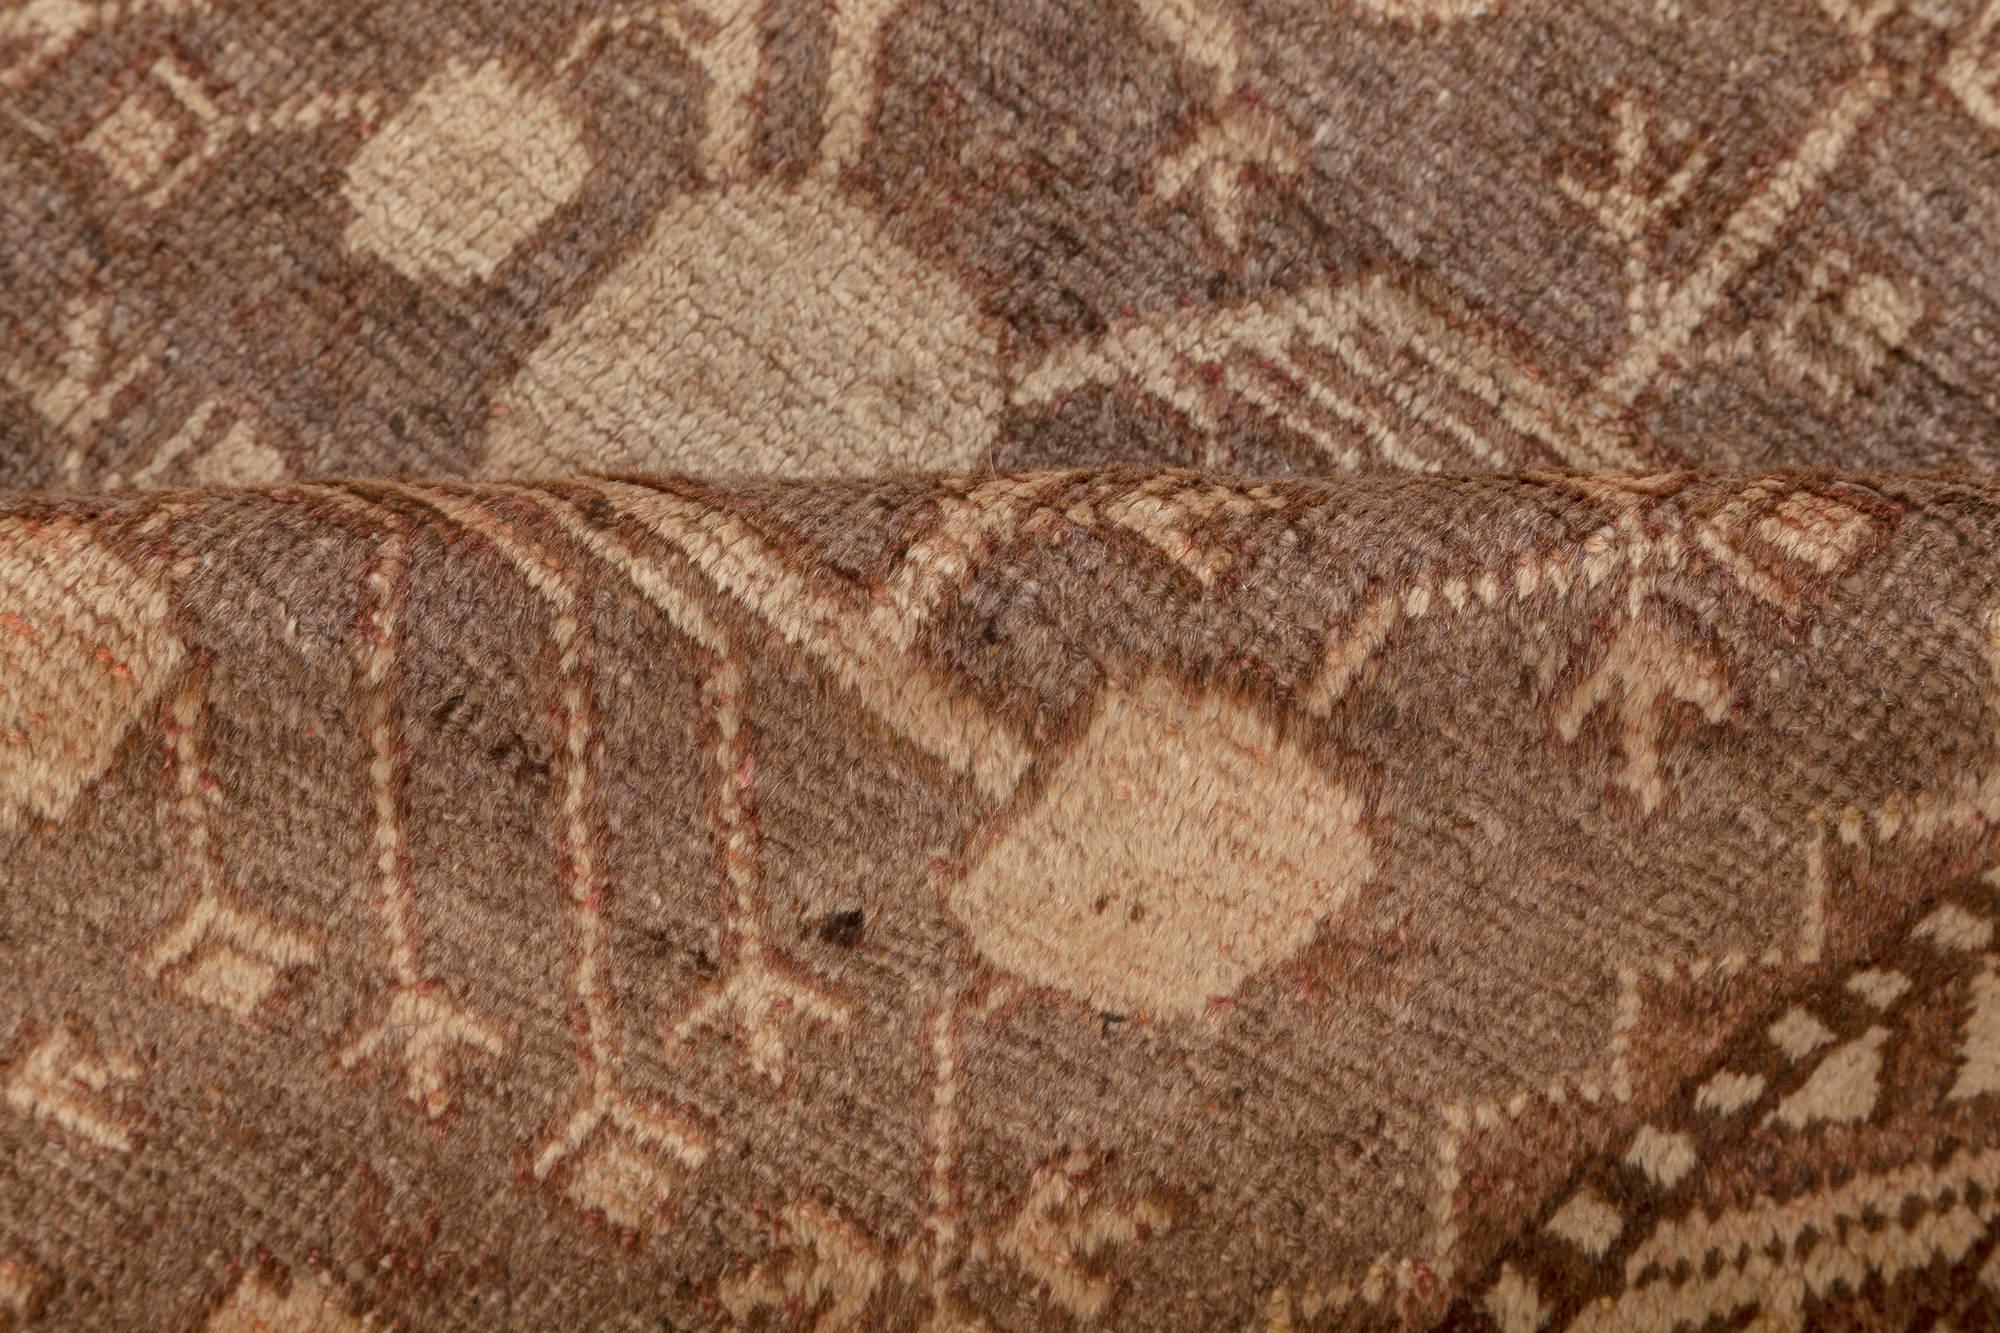 Midcentury Samarkand handmade wool rug in beige, brown and purple.
Size: 6'0